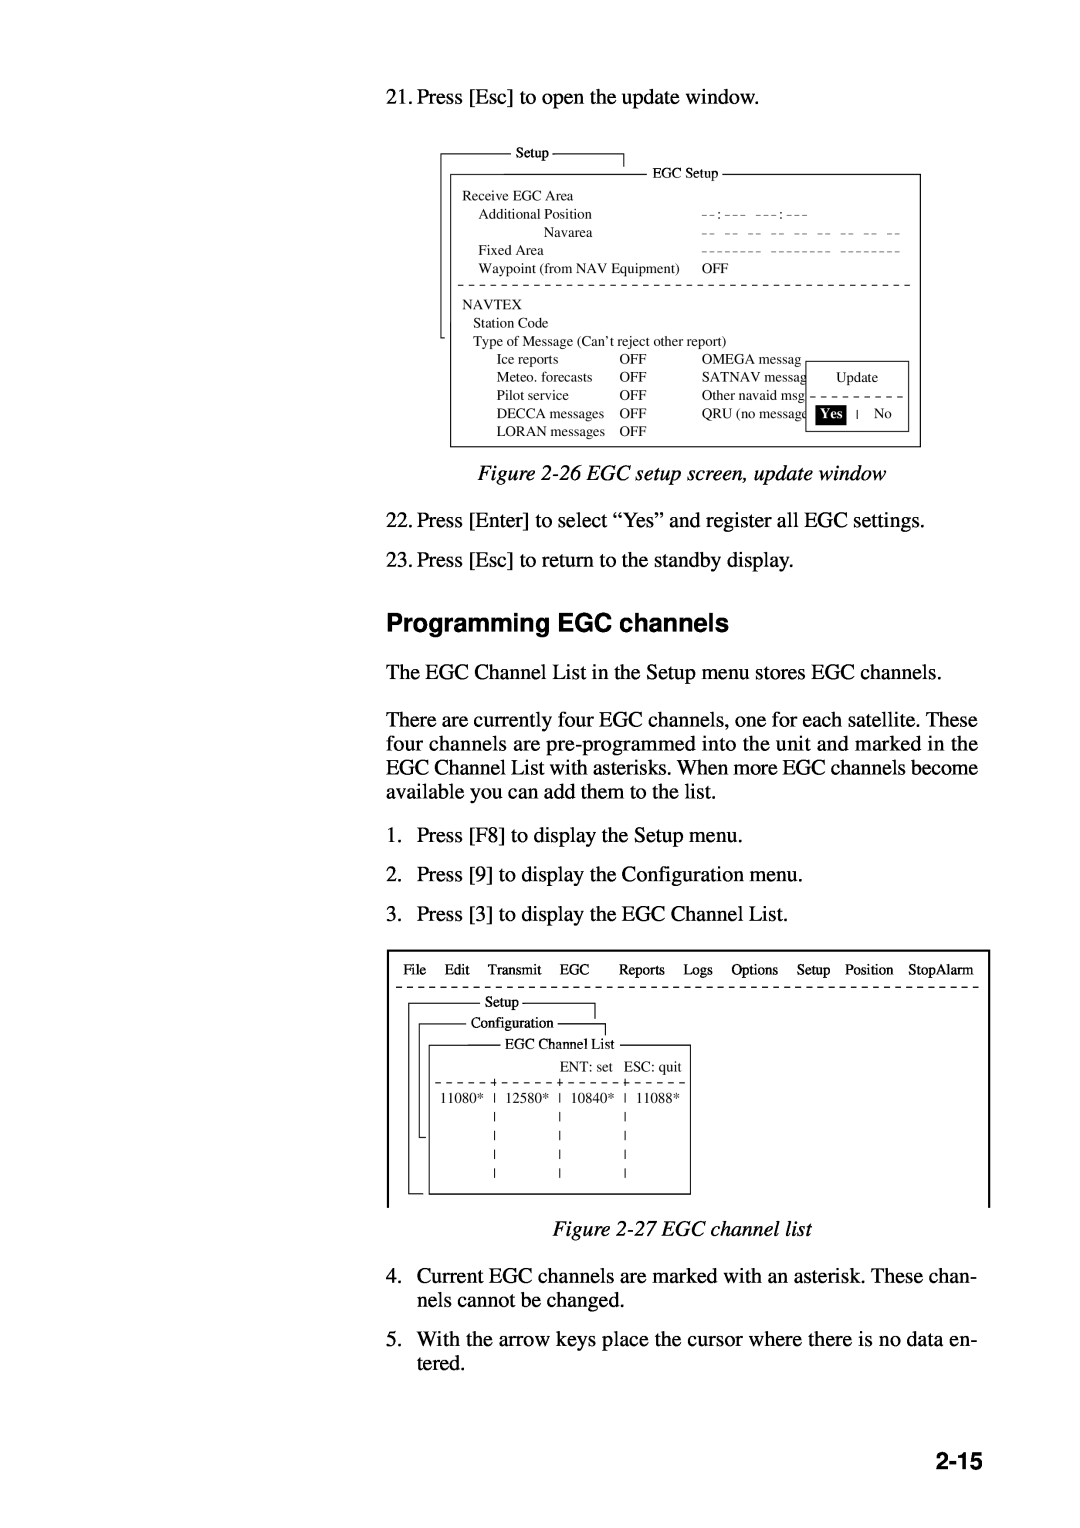 Furuno RC-1500-1T manual Programming EGC channels, 2-15, 26 EGC setup screen, update window, 27 EGC channel list 